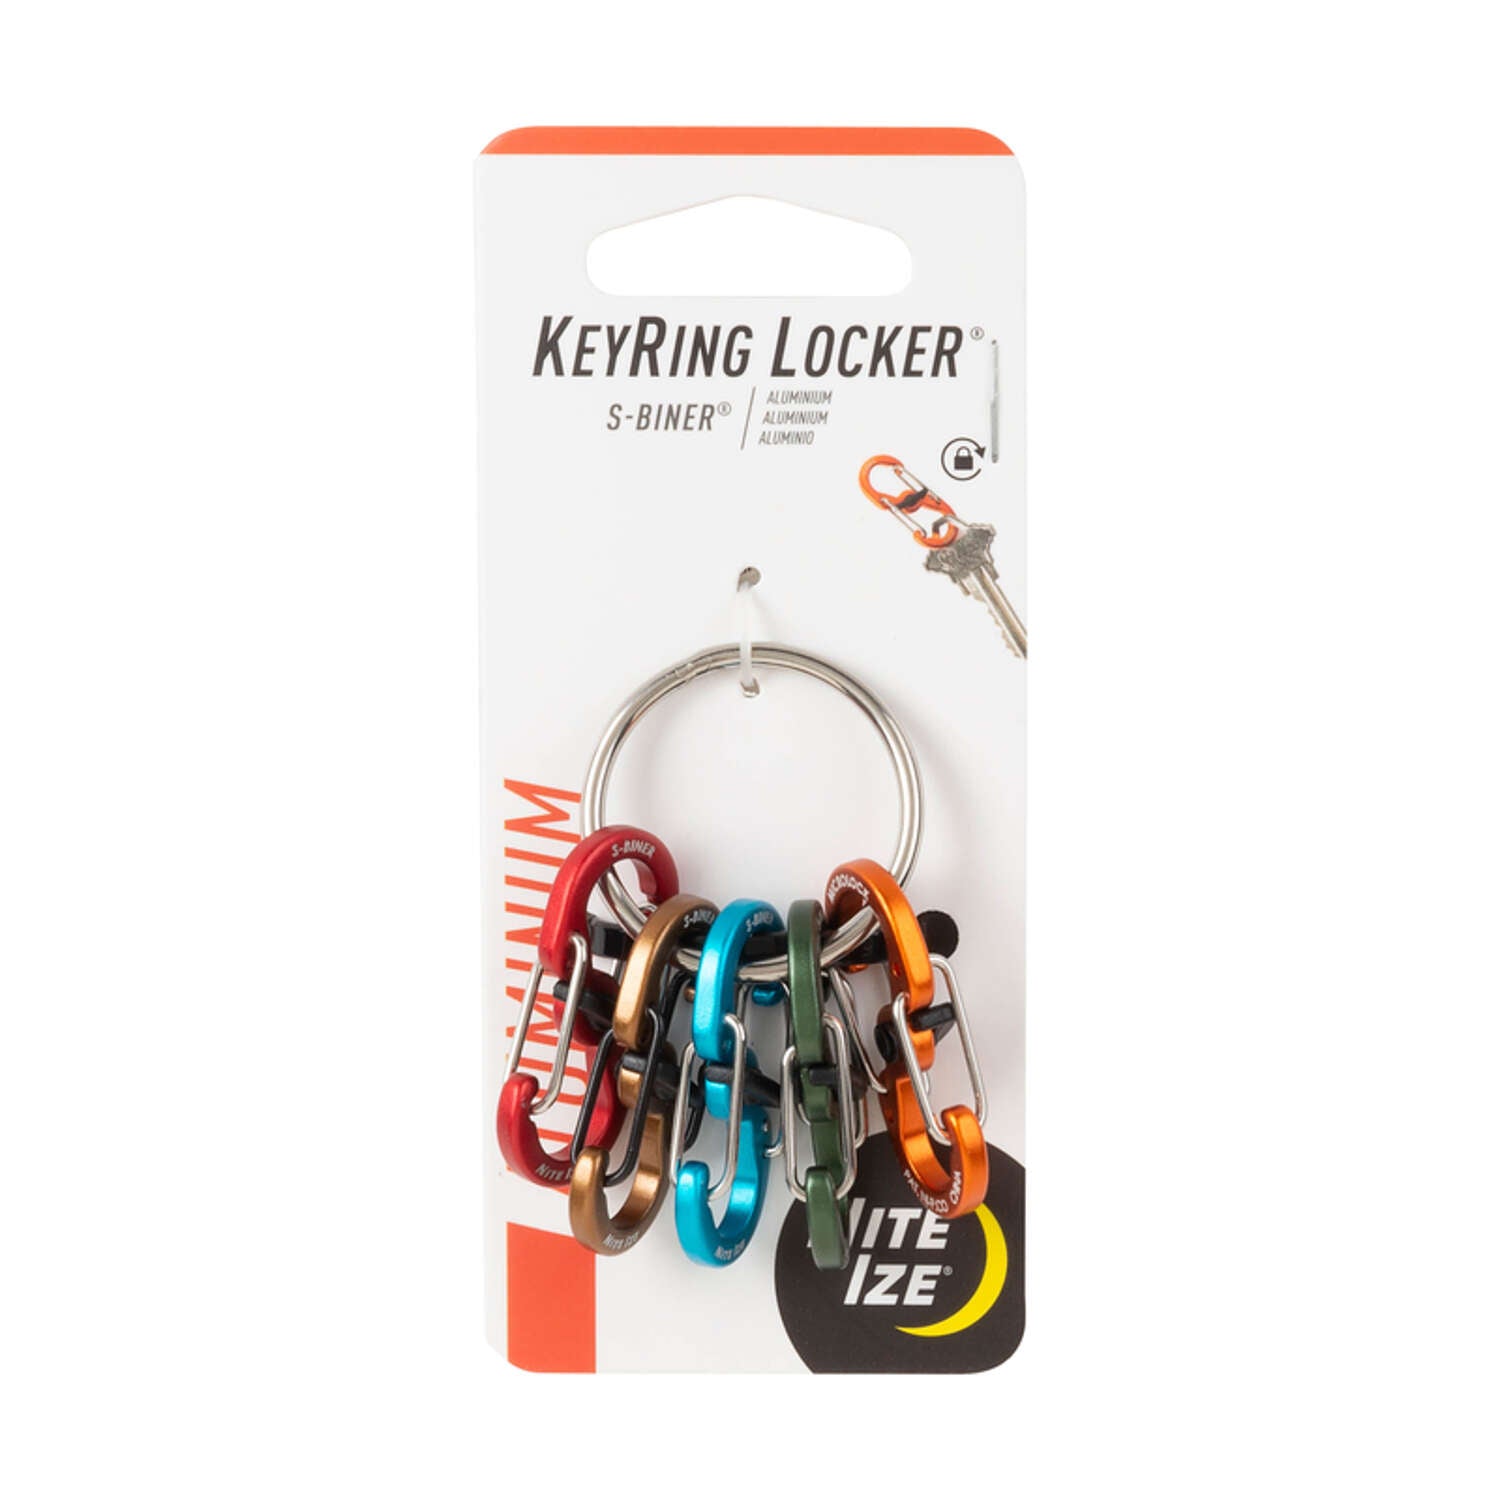 Nitelze KeyRing Locker Aluminum